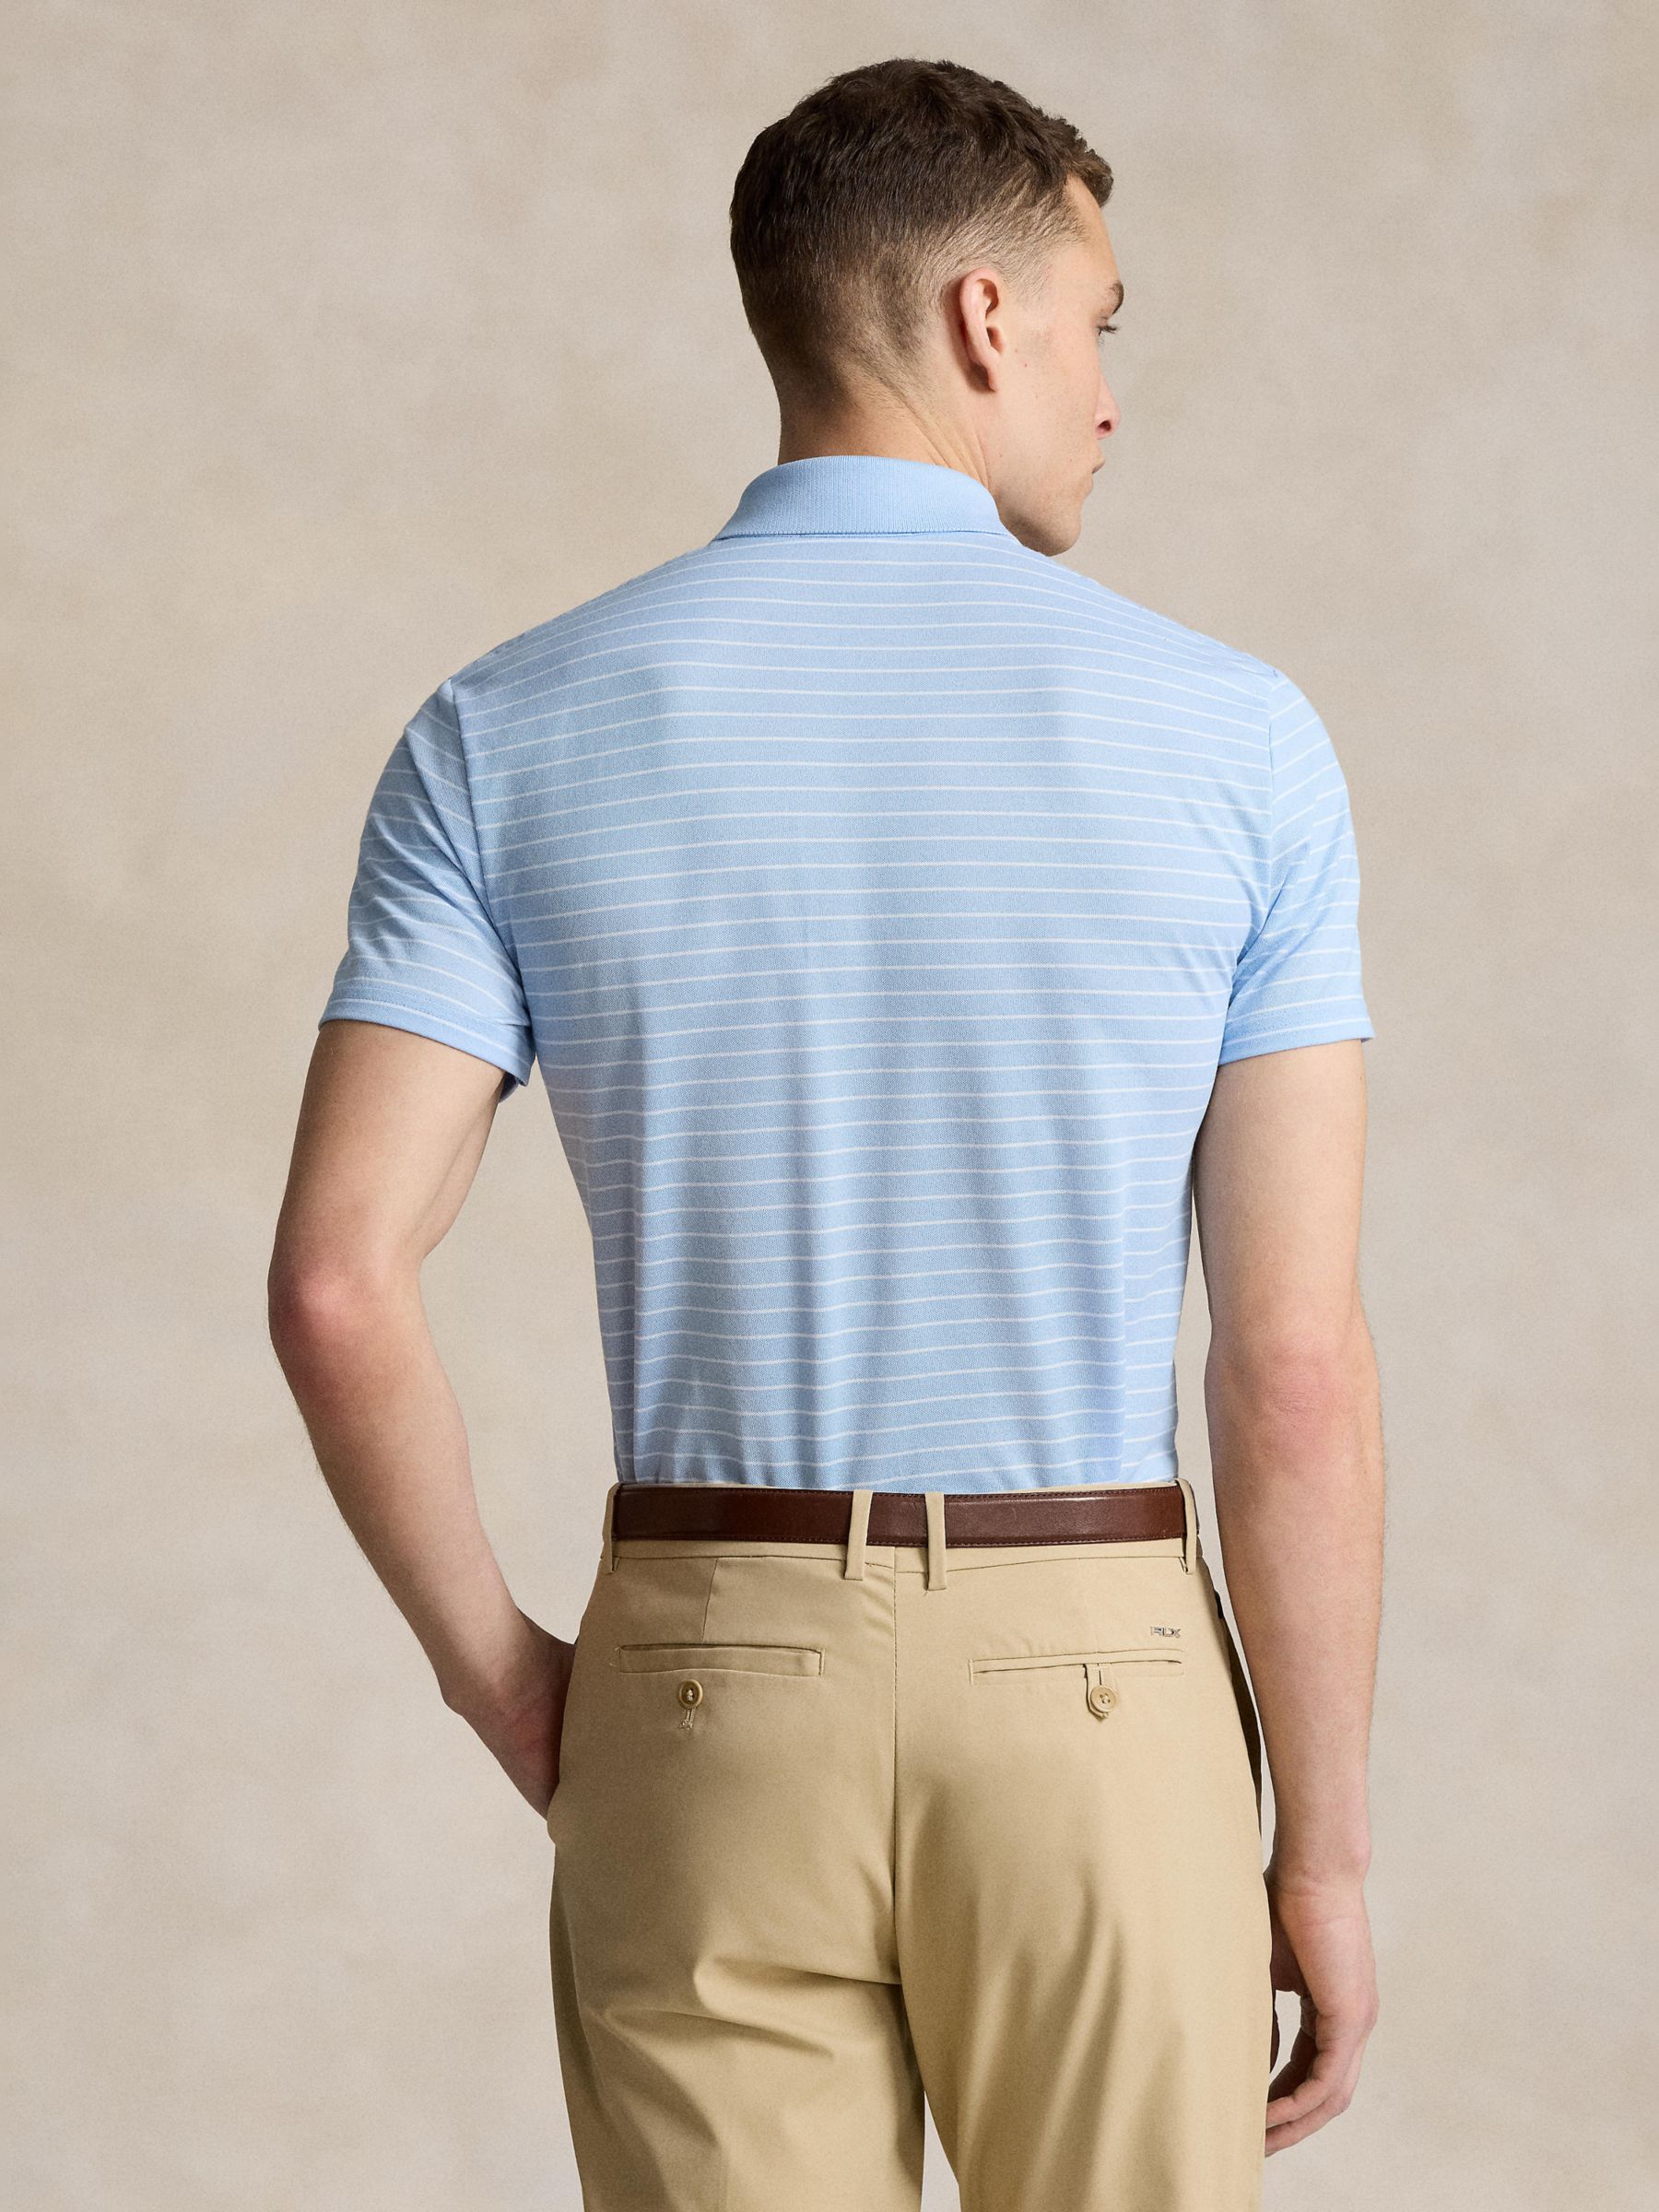 Ralph Lauren Tailored Fit Performance Stripe Polo Shirt, Office Blue/Ceramic White, XXL